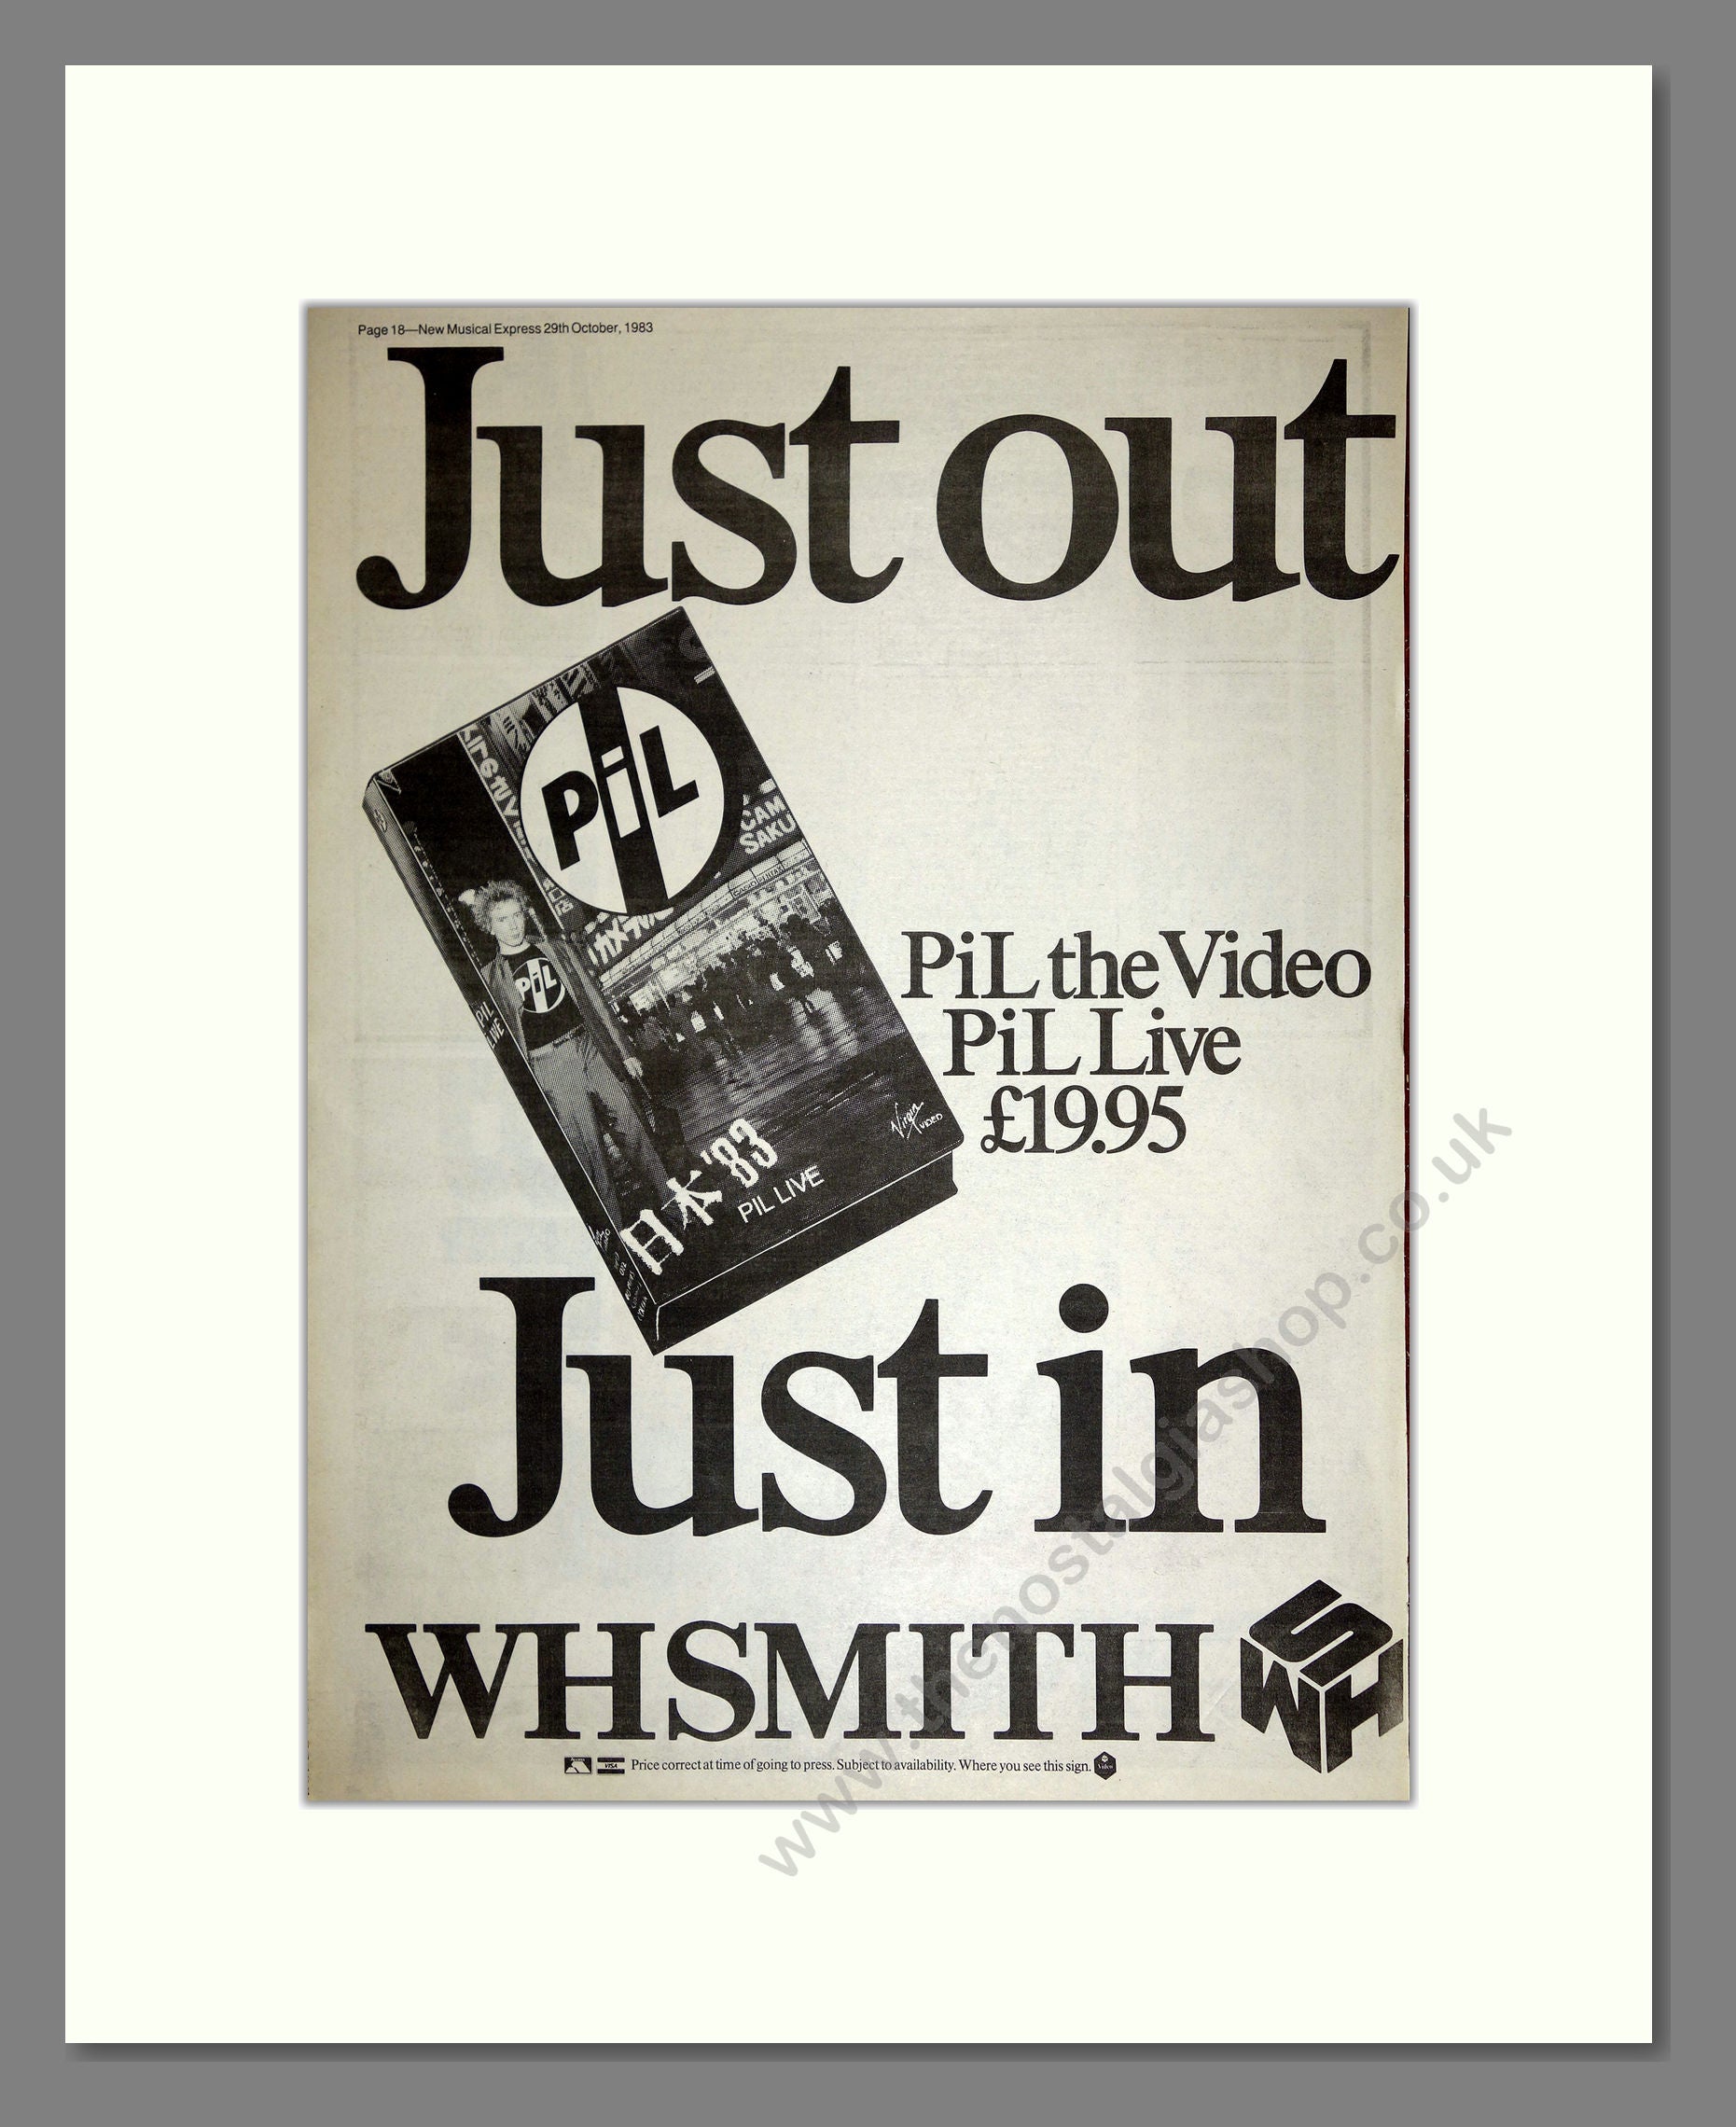 Public Image Limited (PIL) - The Live Video. Vintage Advert 1983 (ref AD16563)